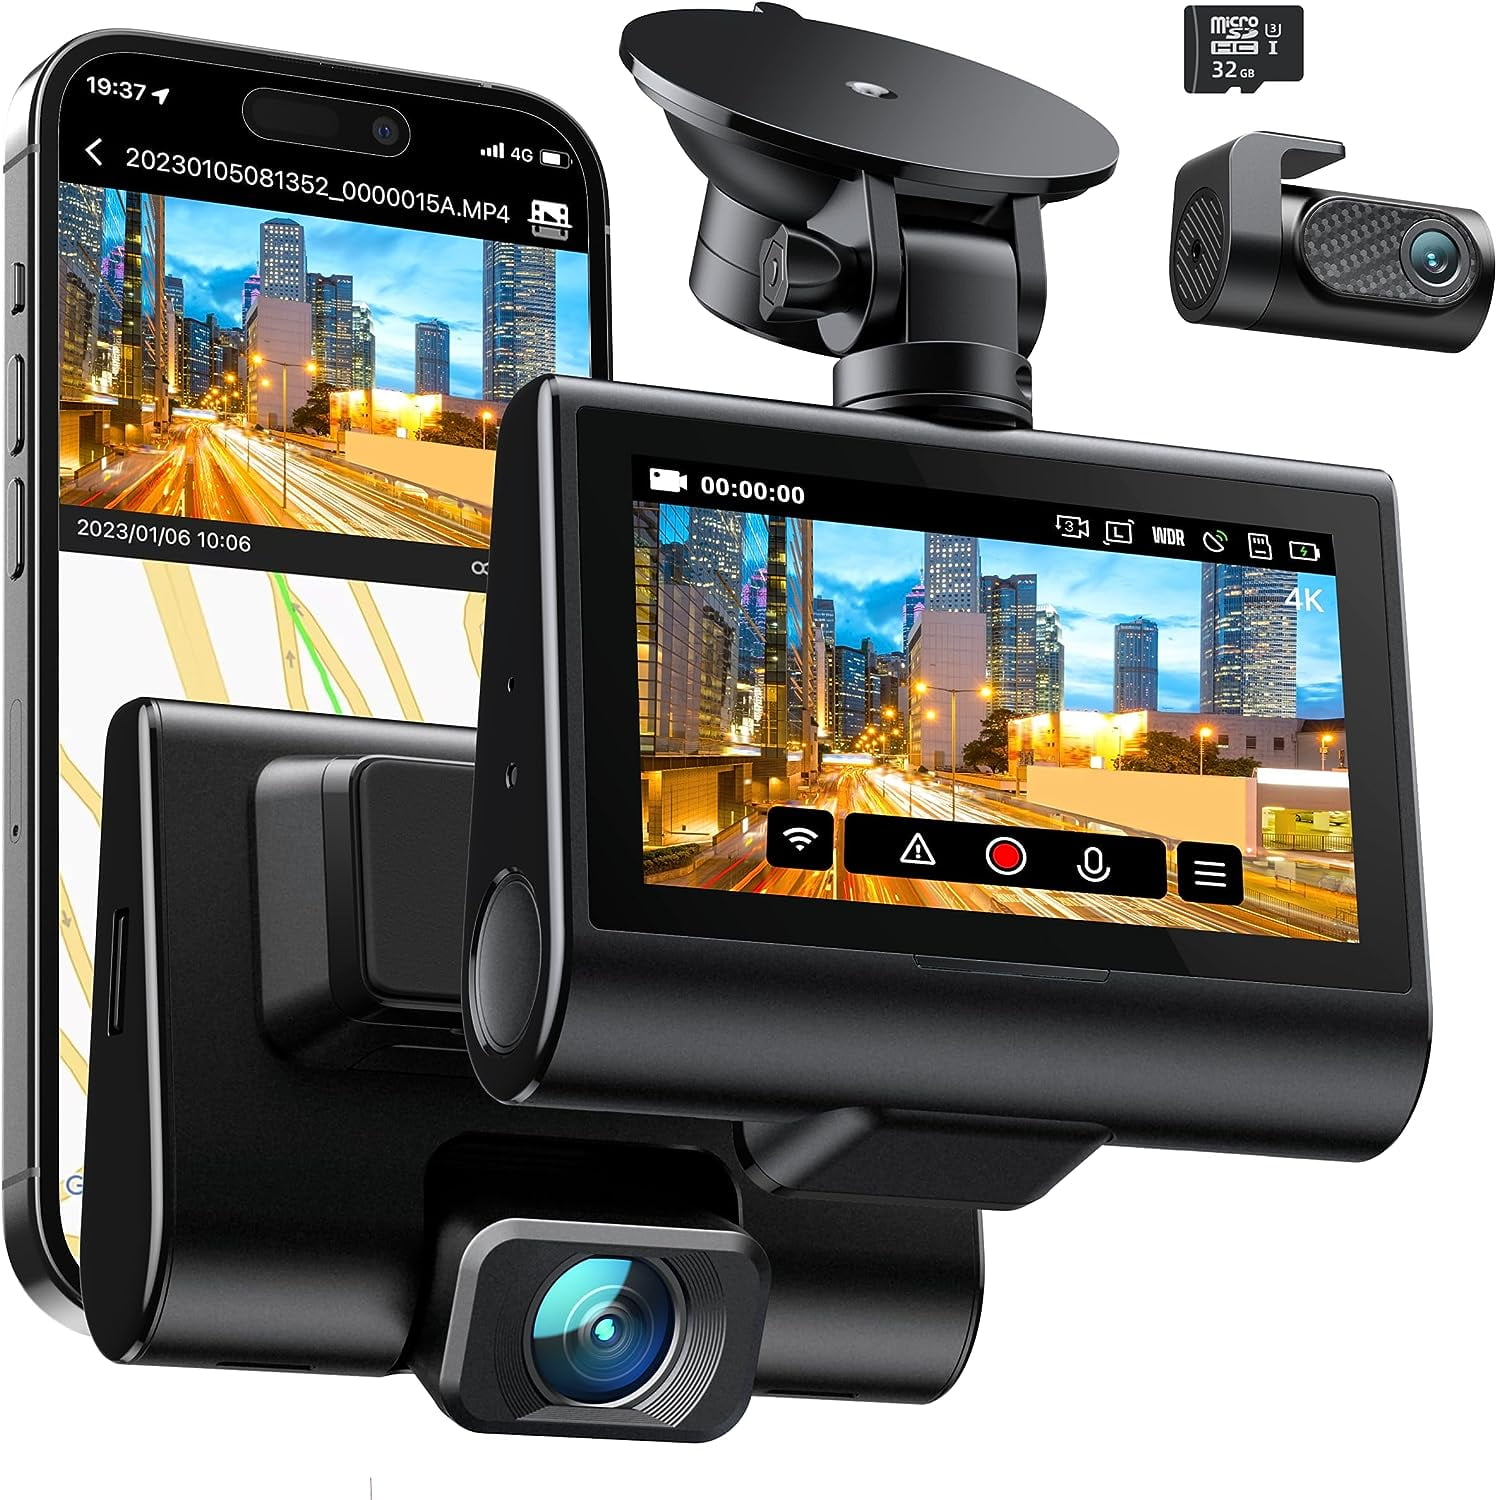 Vantrue UHD 4K WiFi Dash Cam for Cars, 2160PX30FPS Wireless Car